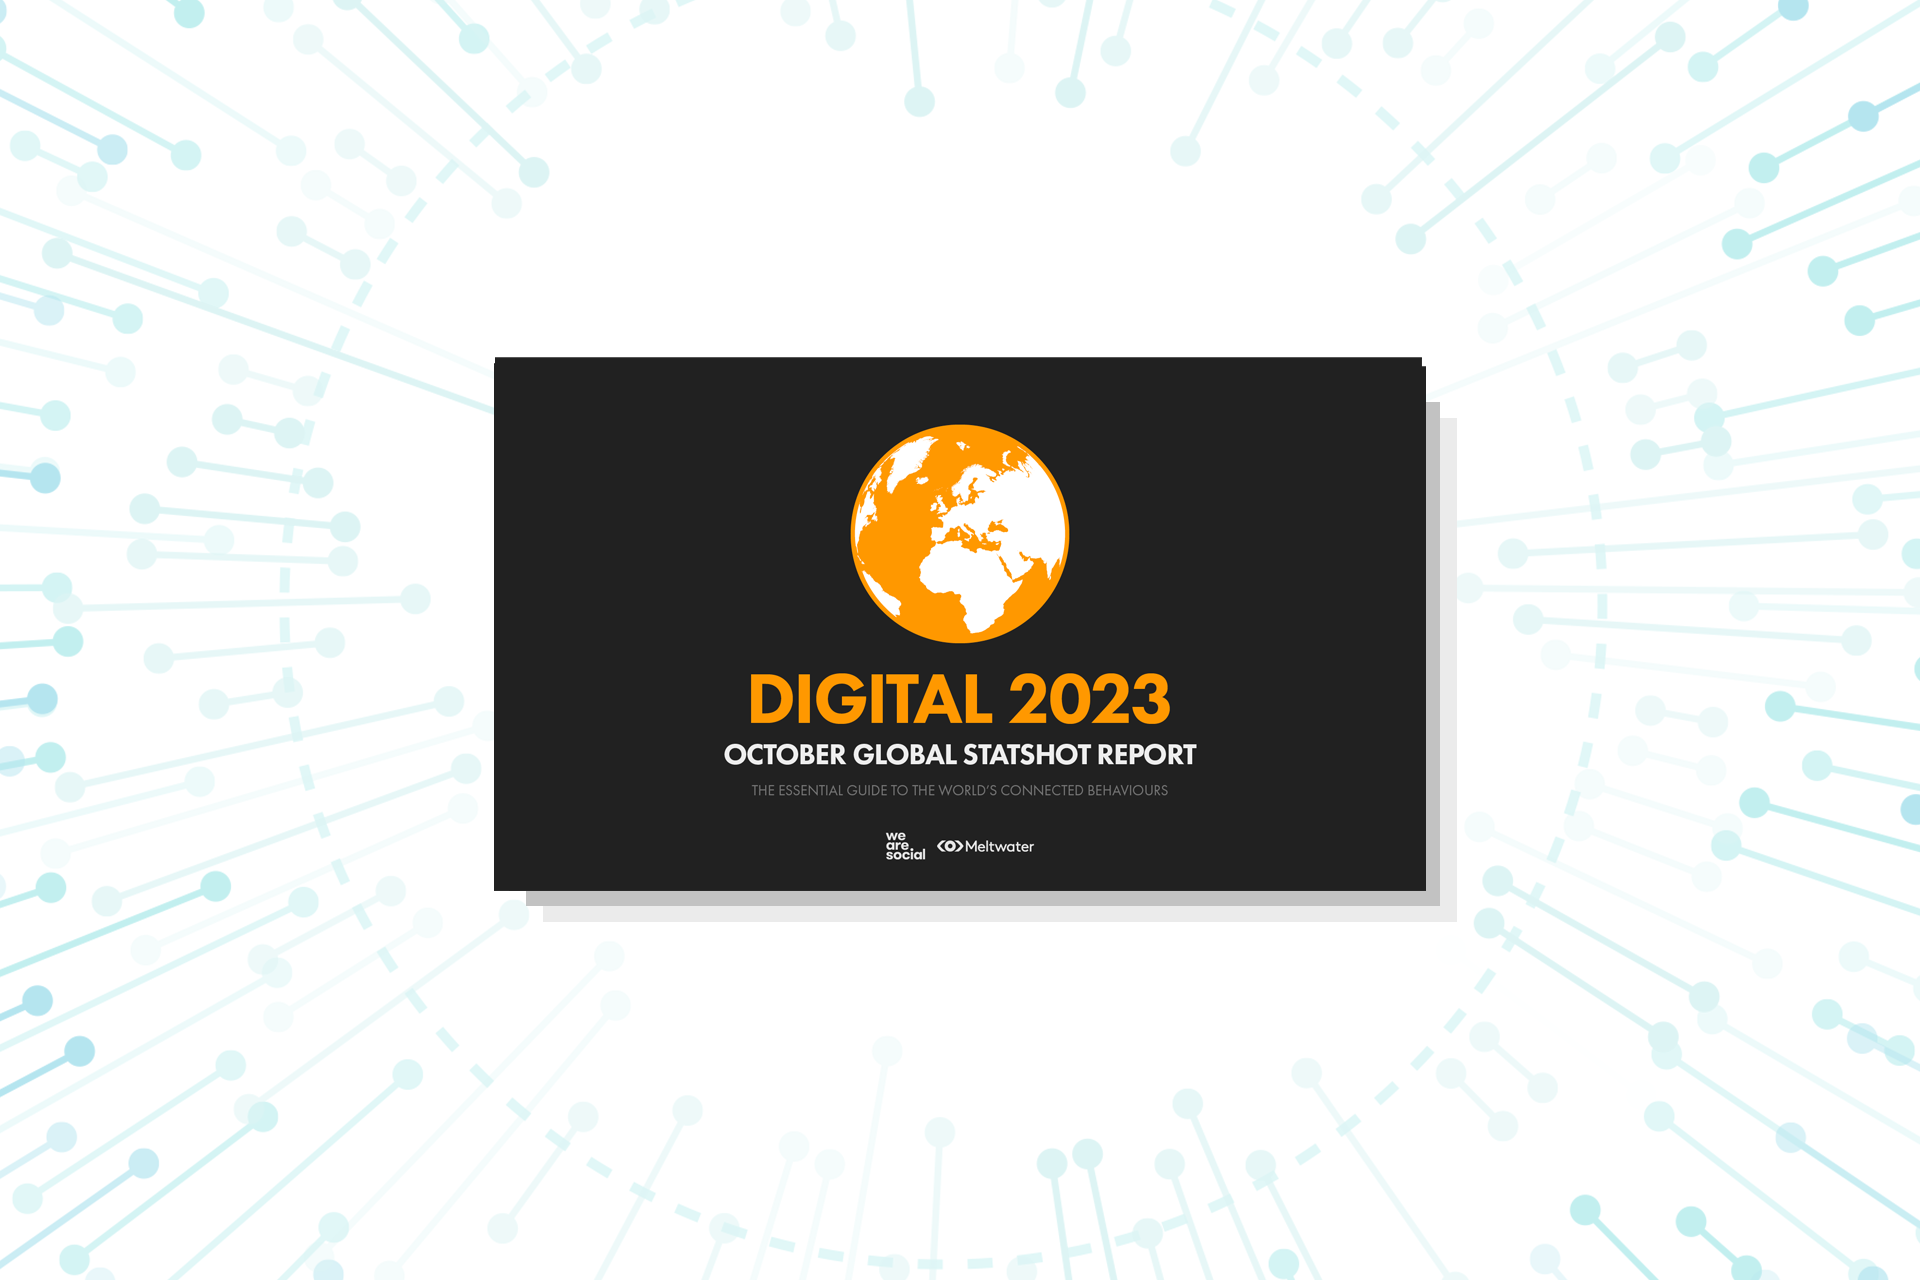 Digital 2023: October Global Statshot Report